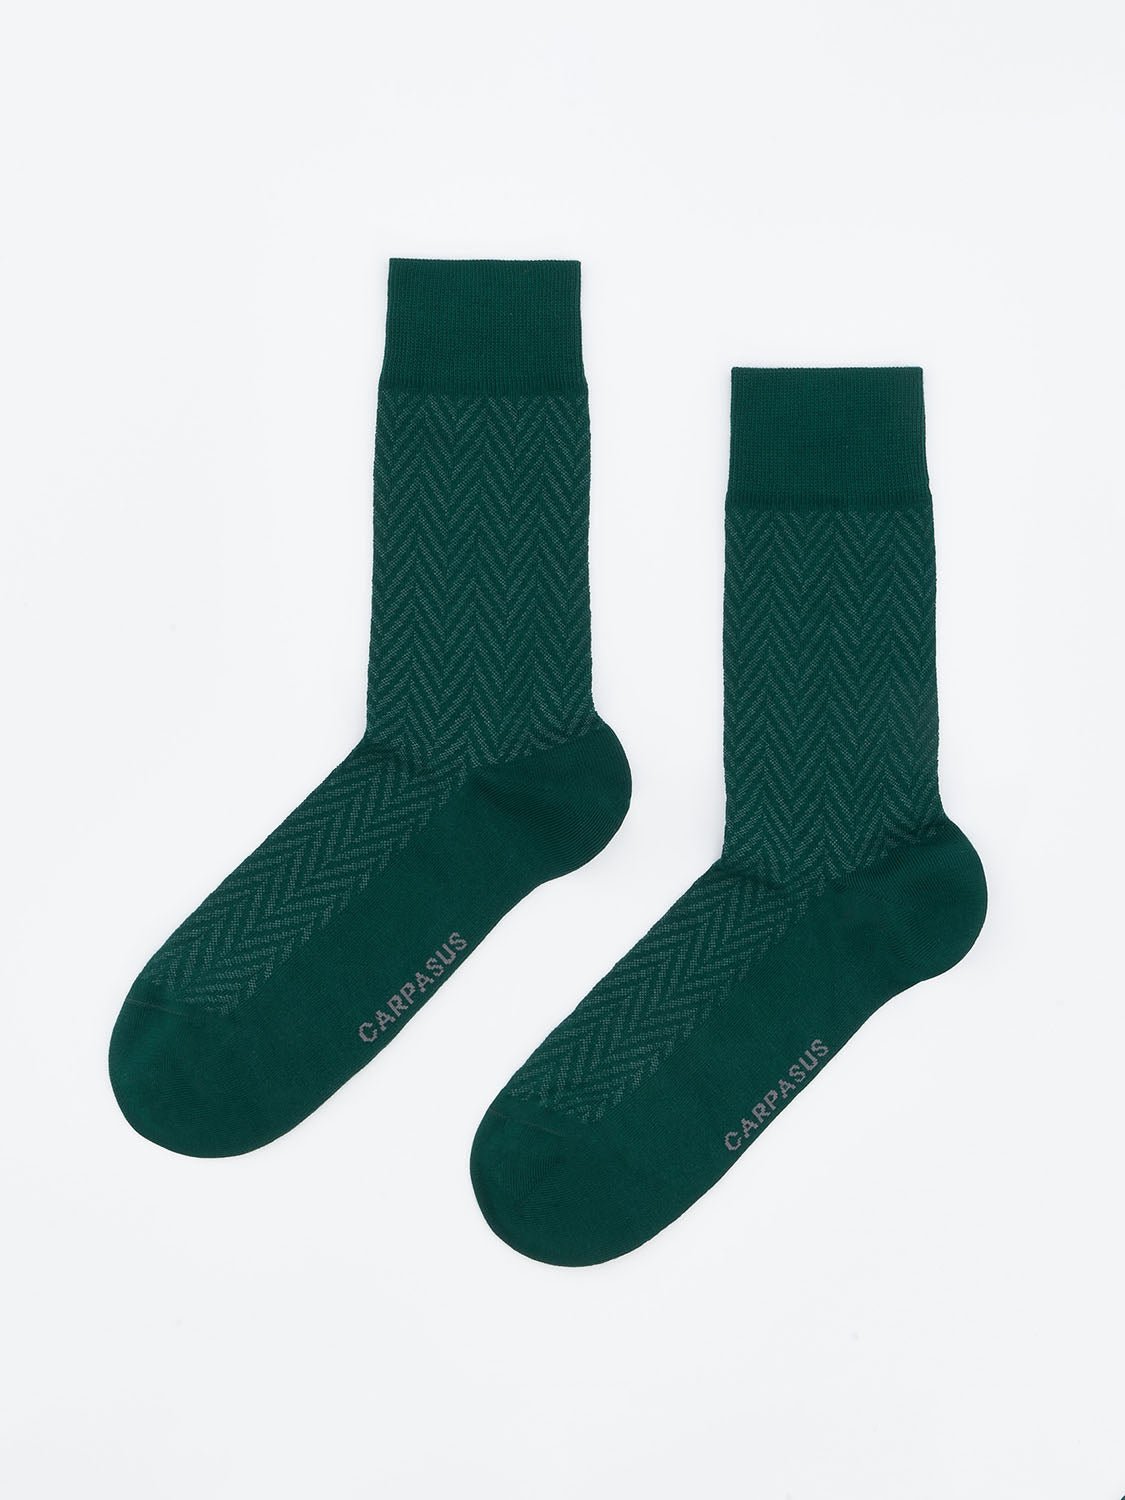 Classy Socks Herringbone Moss